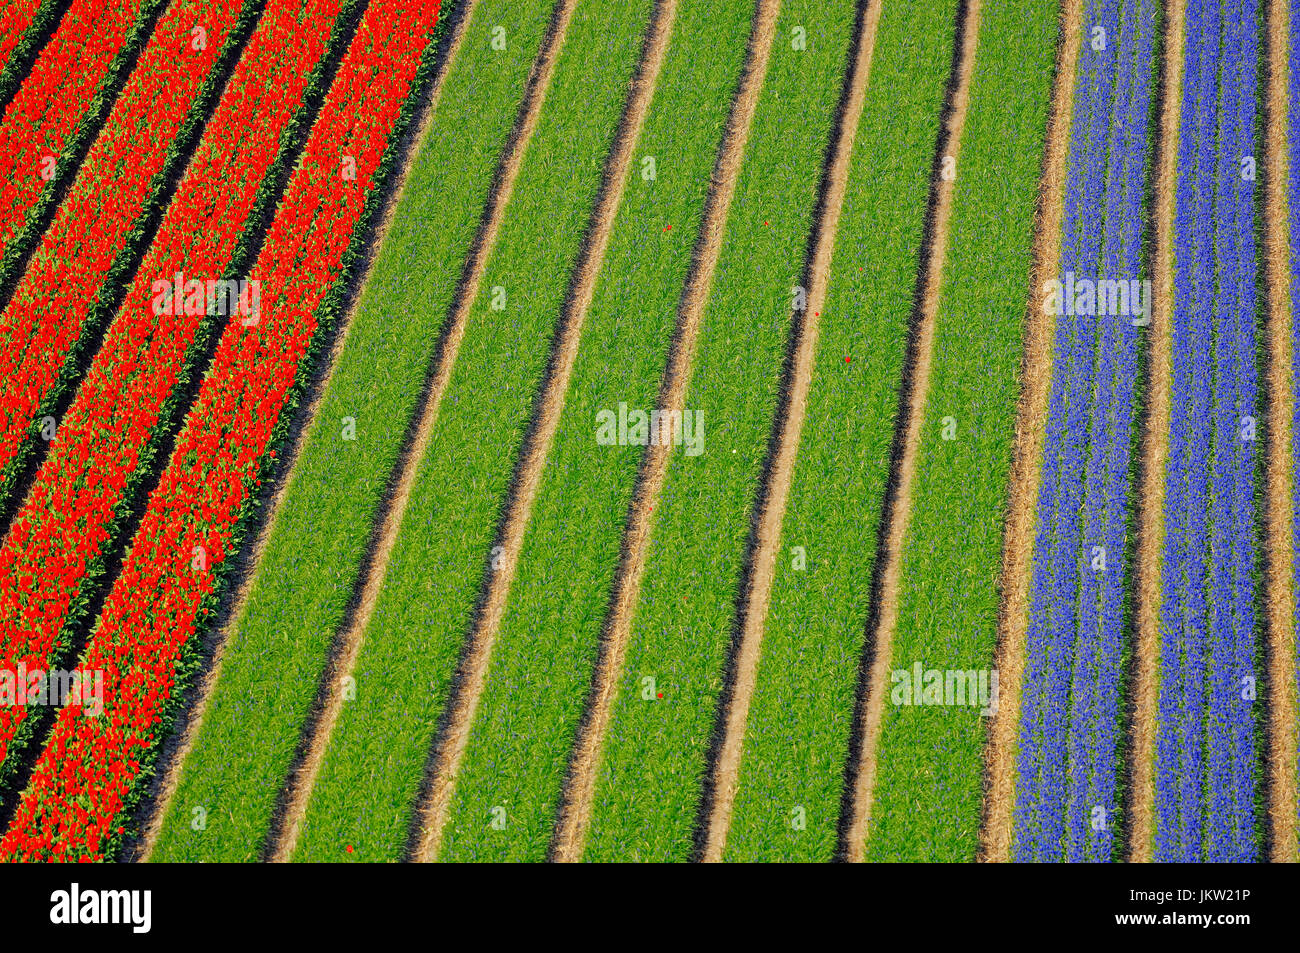 Campi di giacinti e tulipani vicino a Lisse, Paesi Bassi | Felder mit Hyazinthen und Tulpen bei Lisse, Niederlande Foto Stock